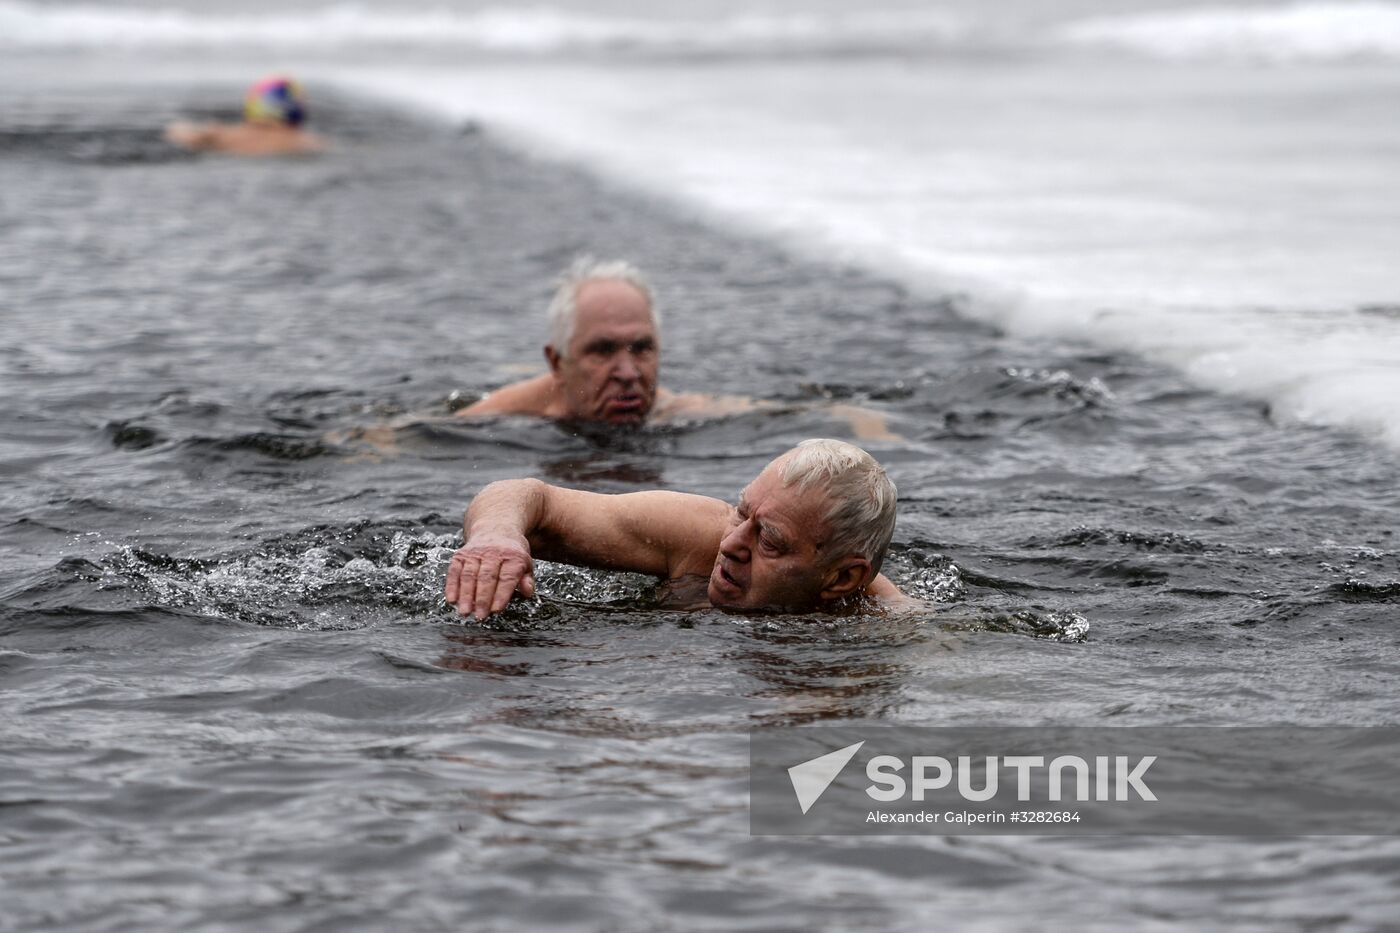 Swim race to mark anniversary of lifting Siege of Leningrad